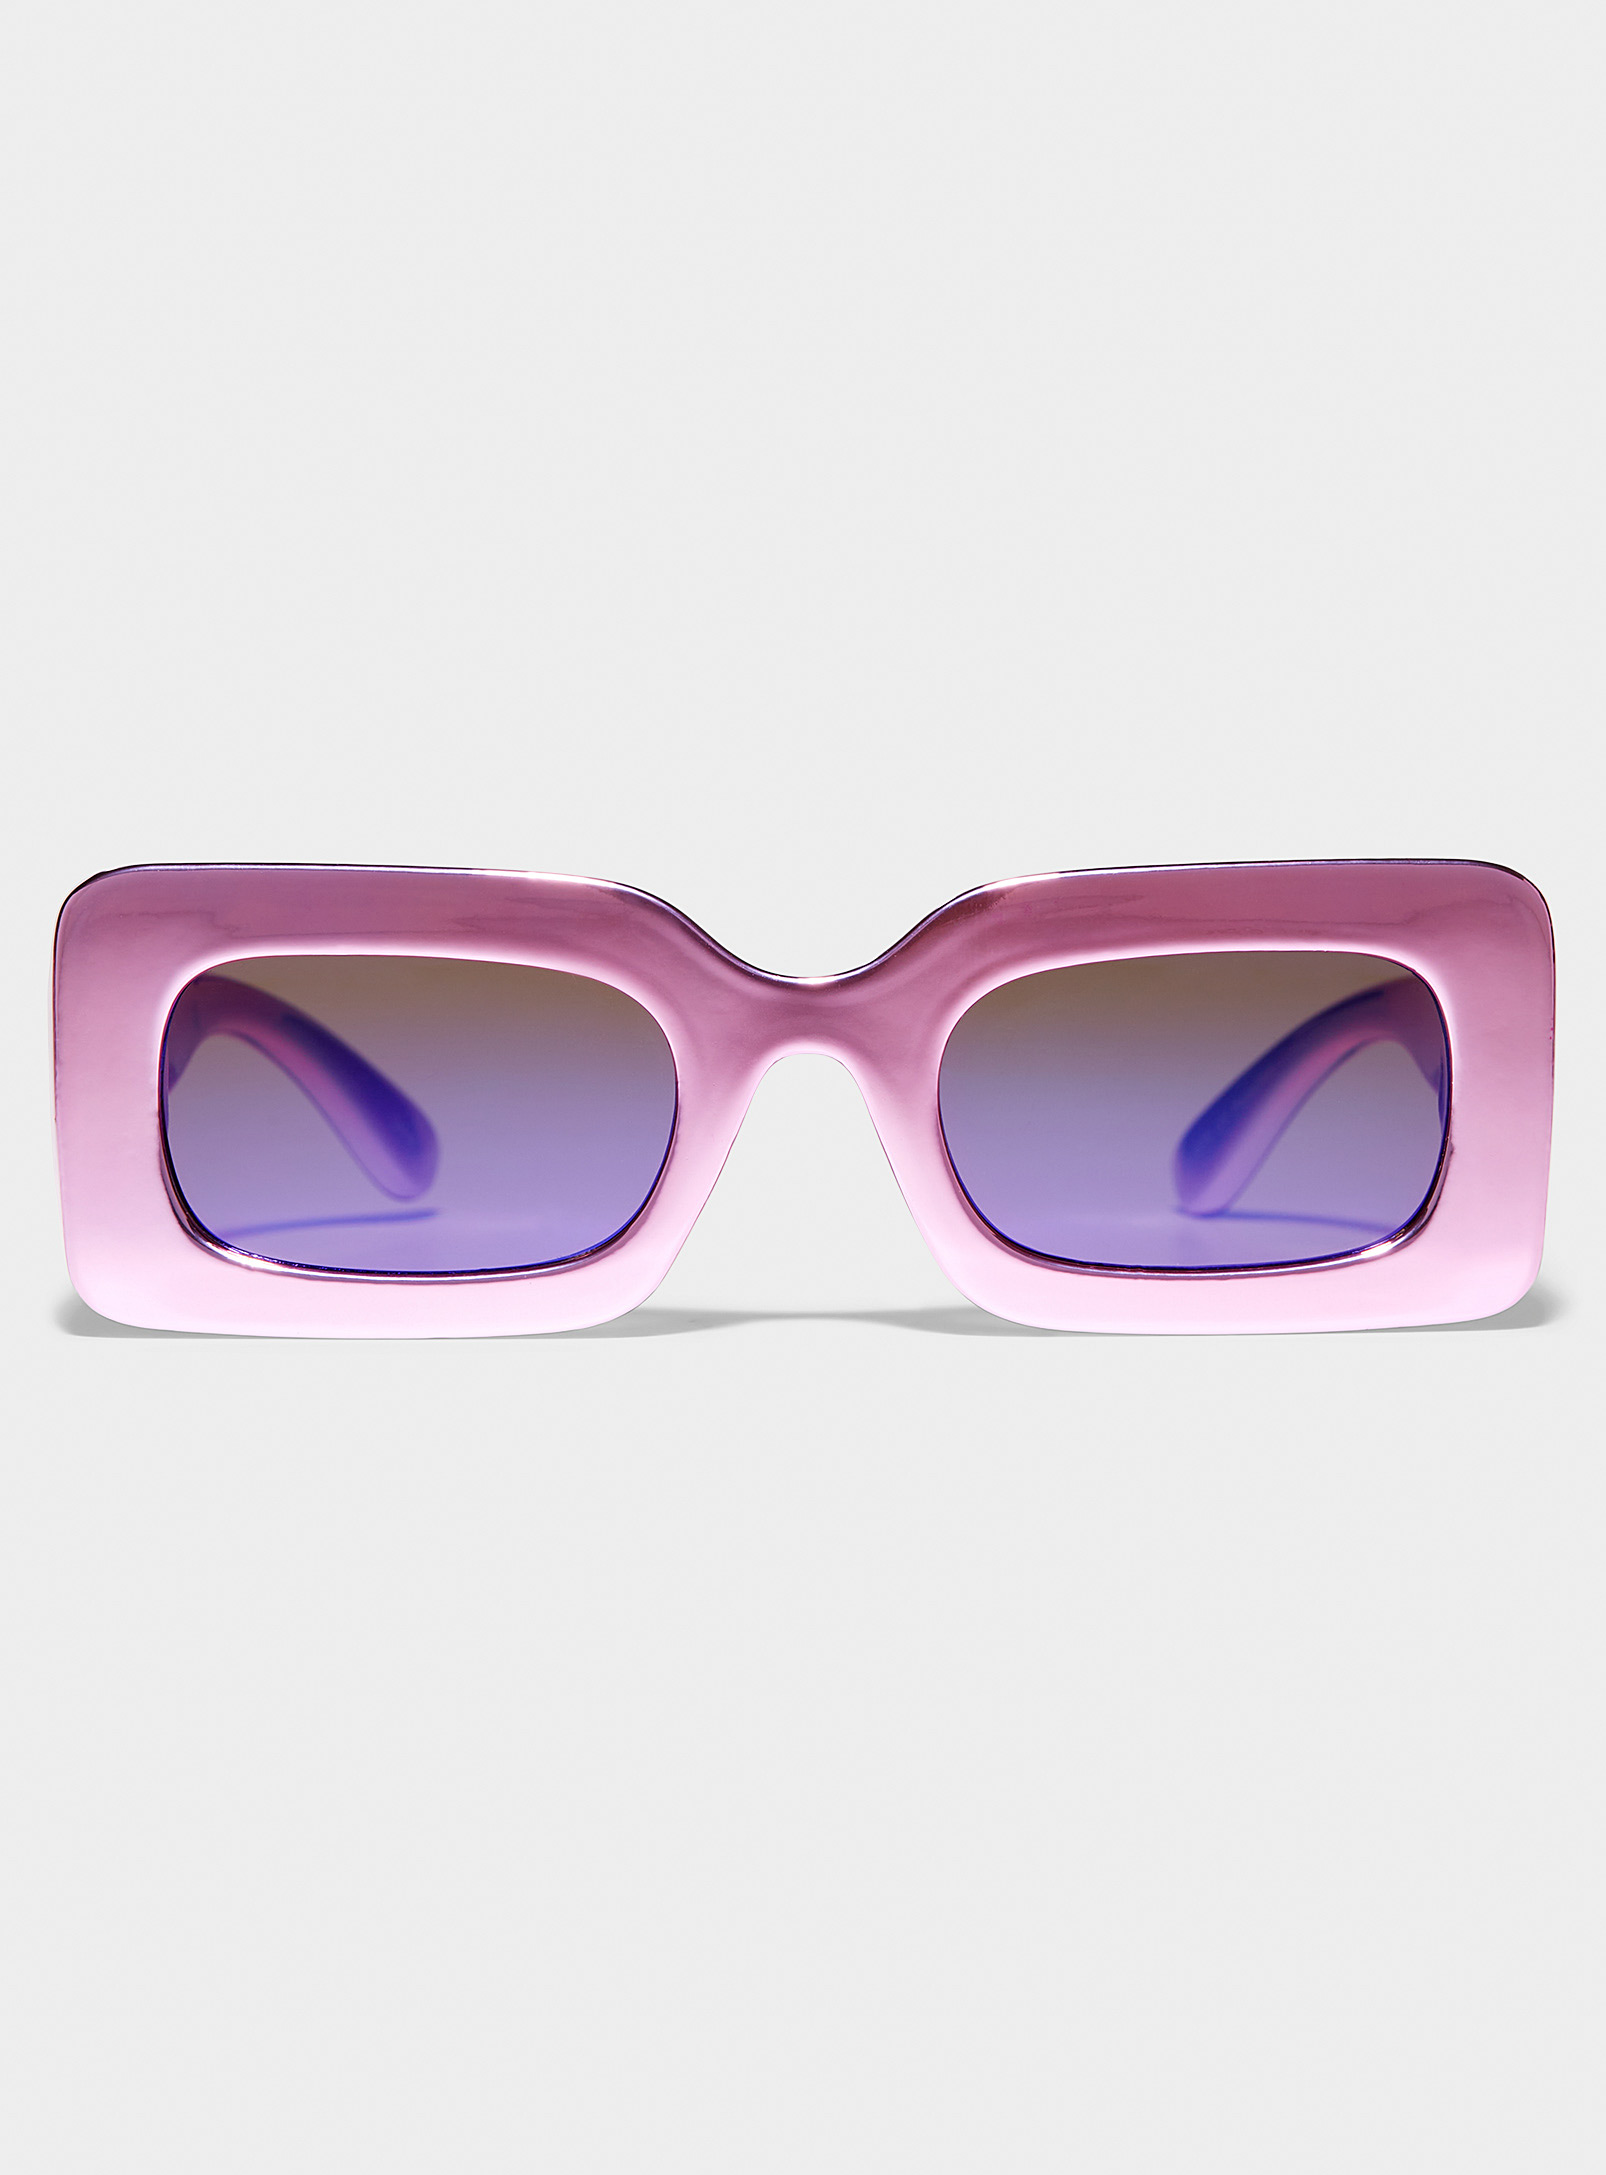 Simons - Women's Metallic-pink rectangular sunglasses